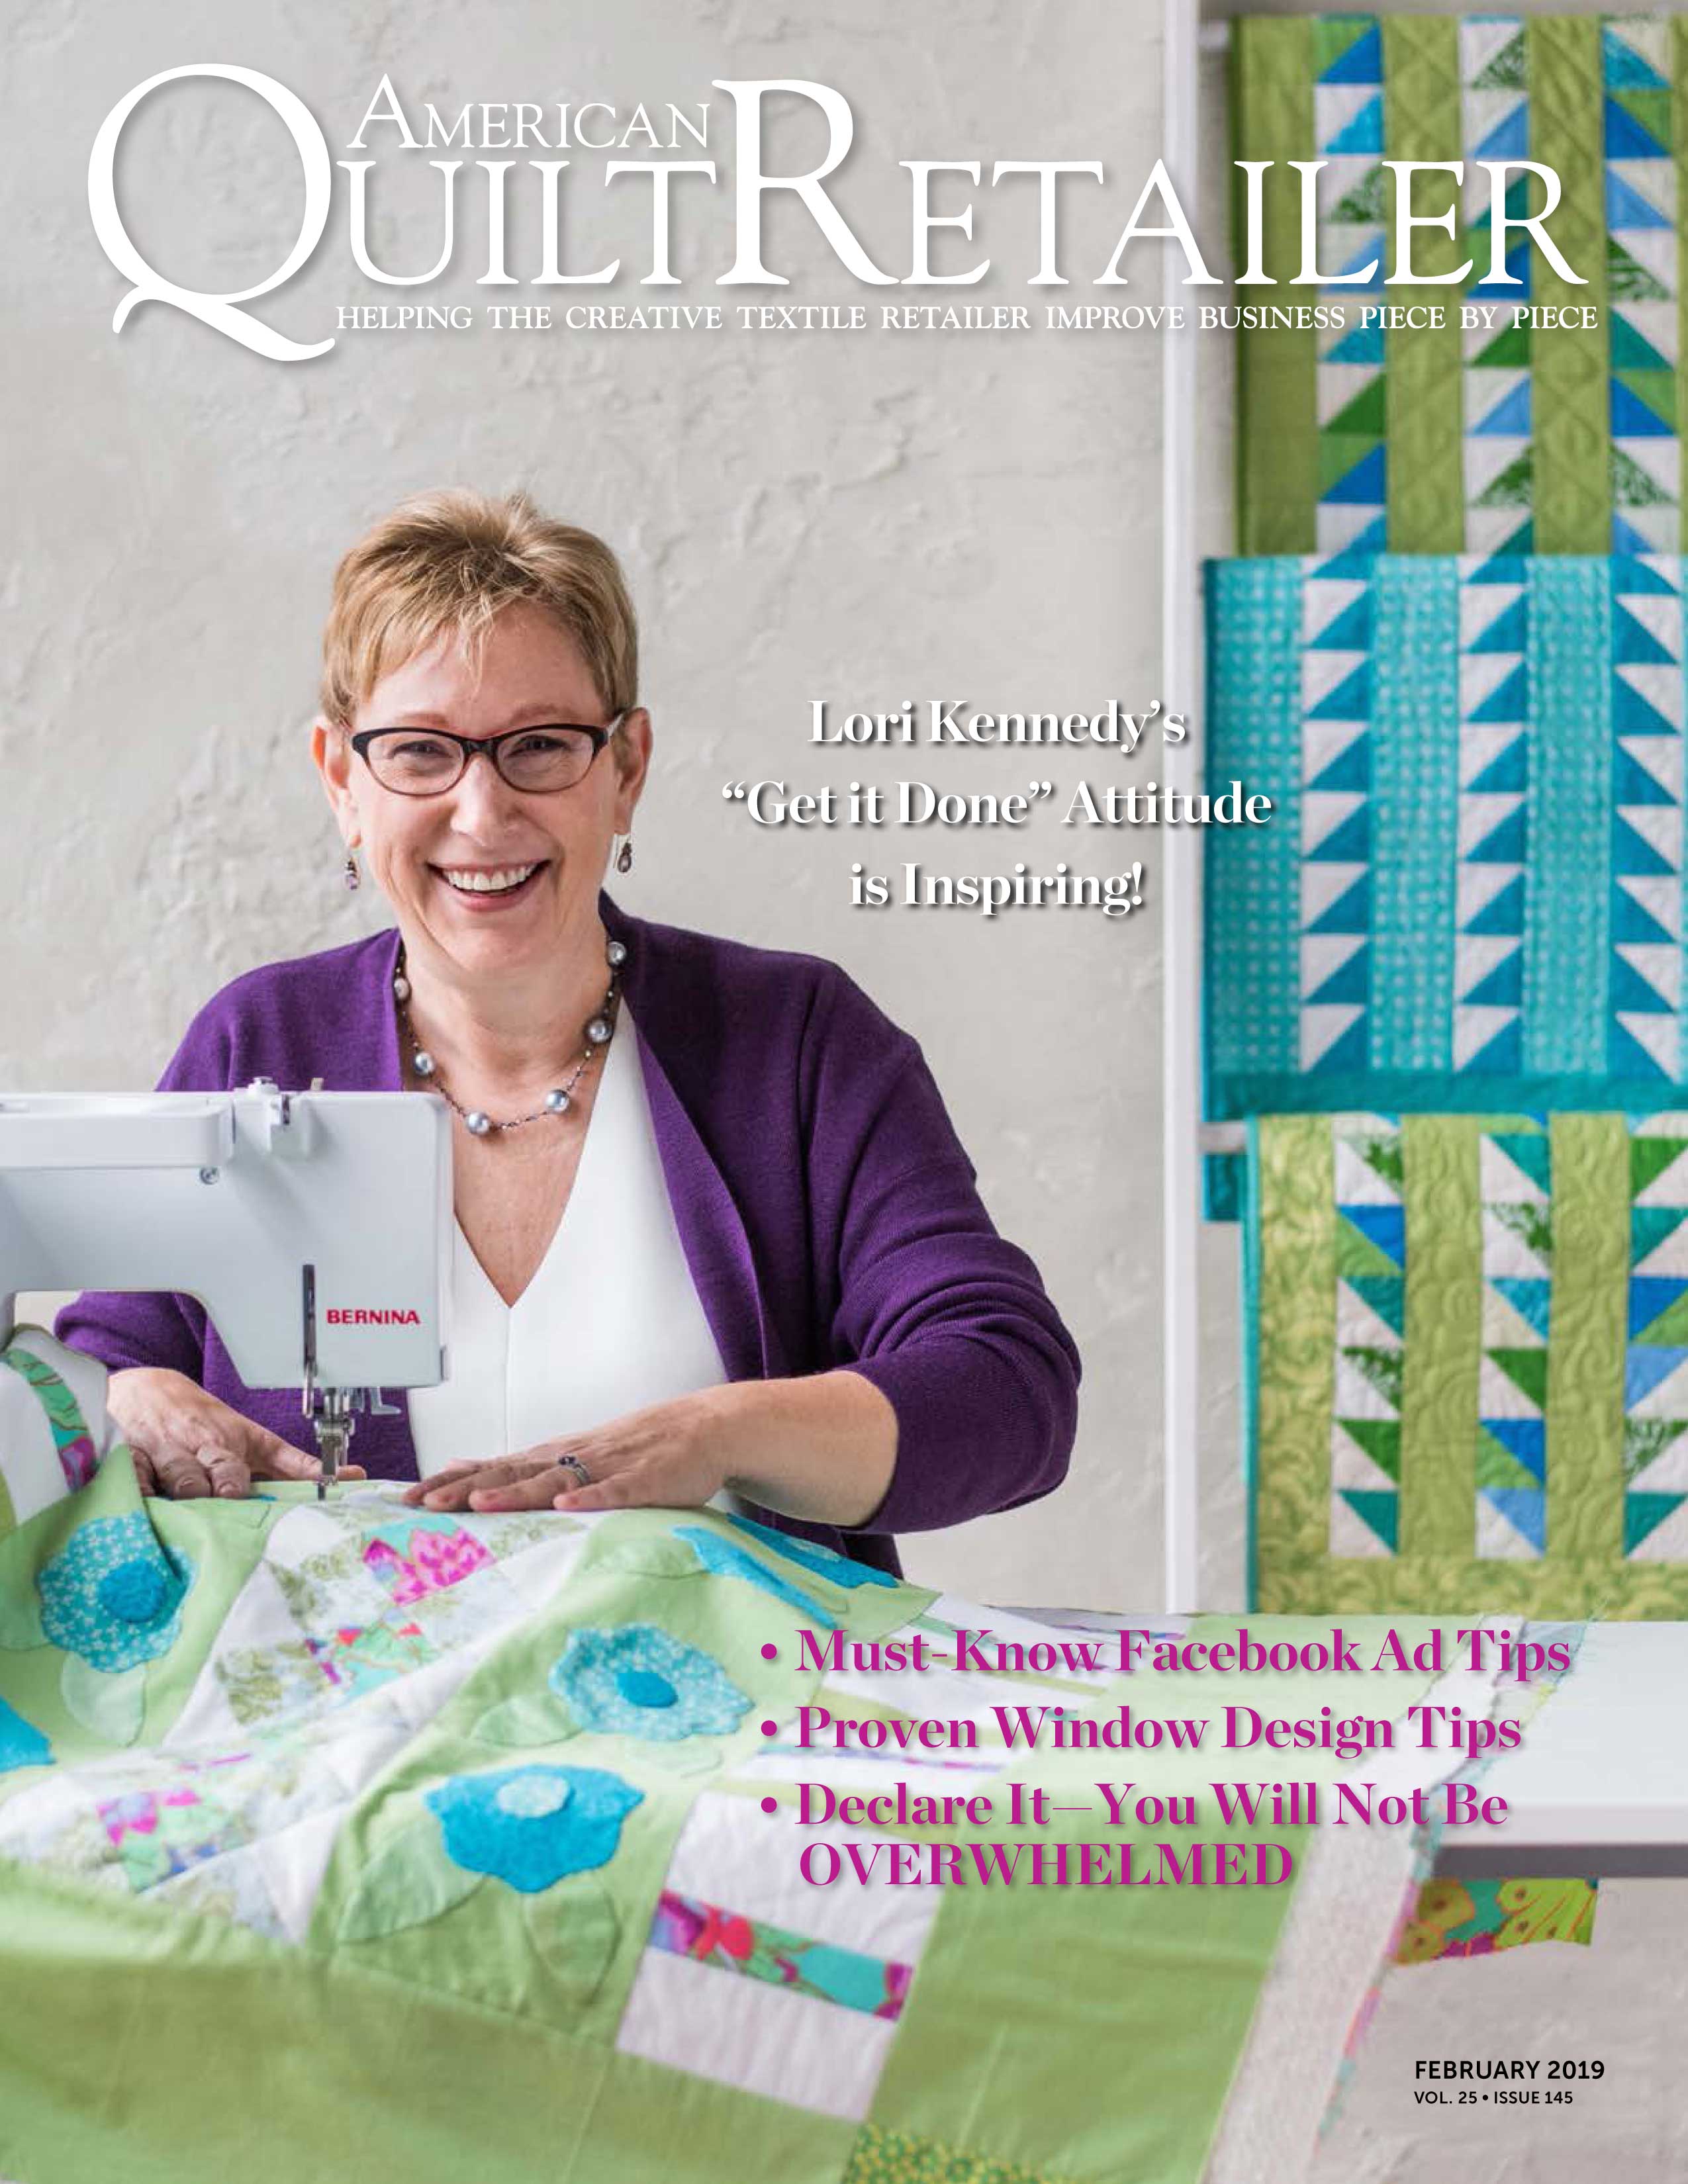 American Quilt Retailer: February 2019 Magazine cover